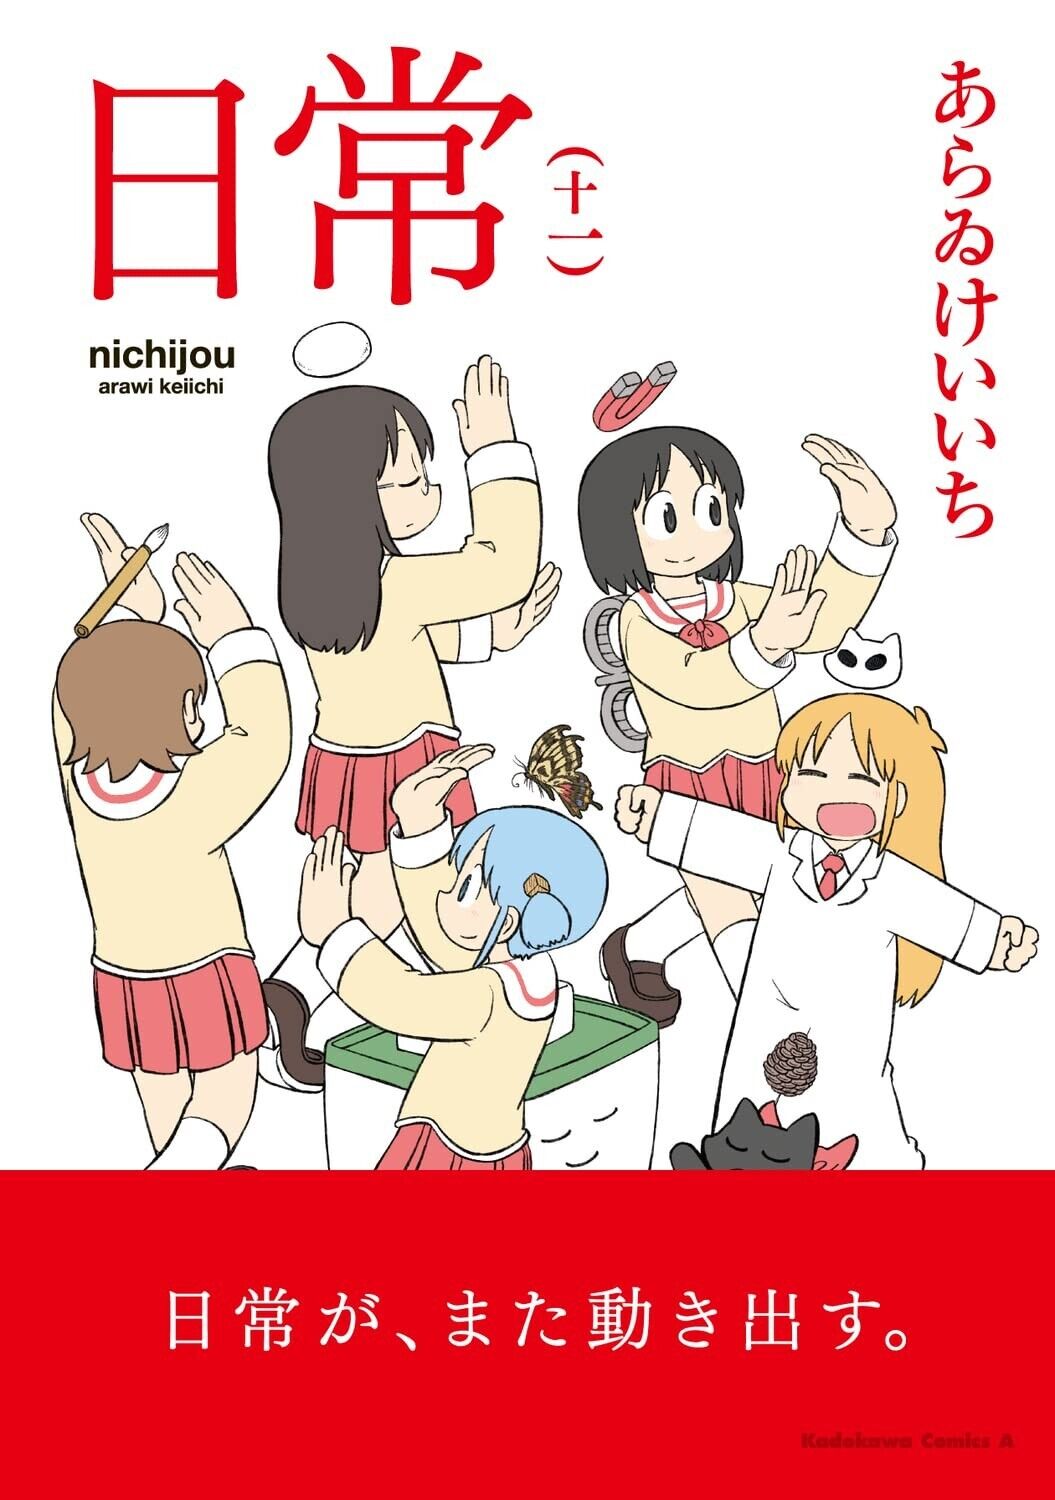 nichijou #11 | JAPAN Manga Japanese Comic Book